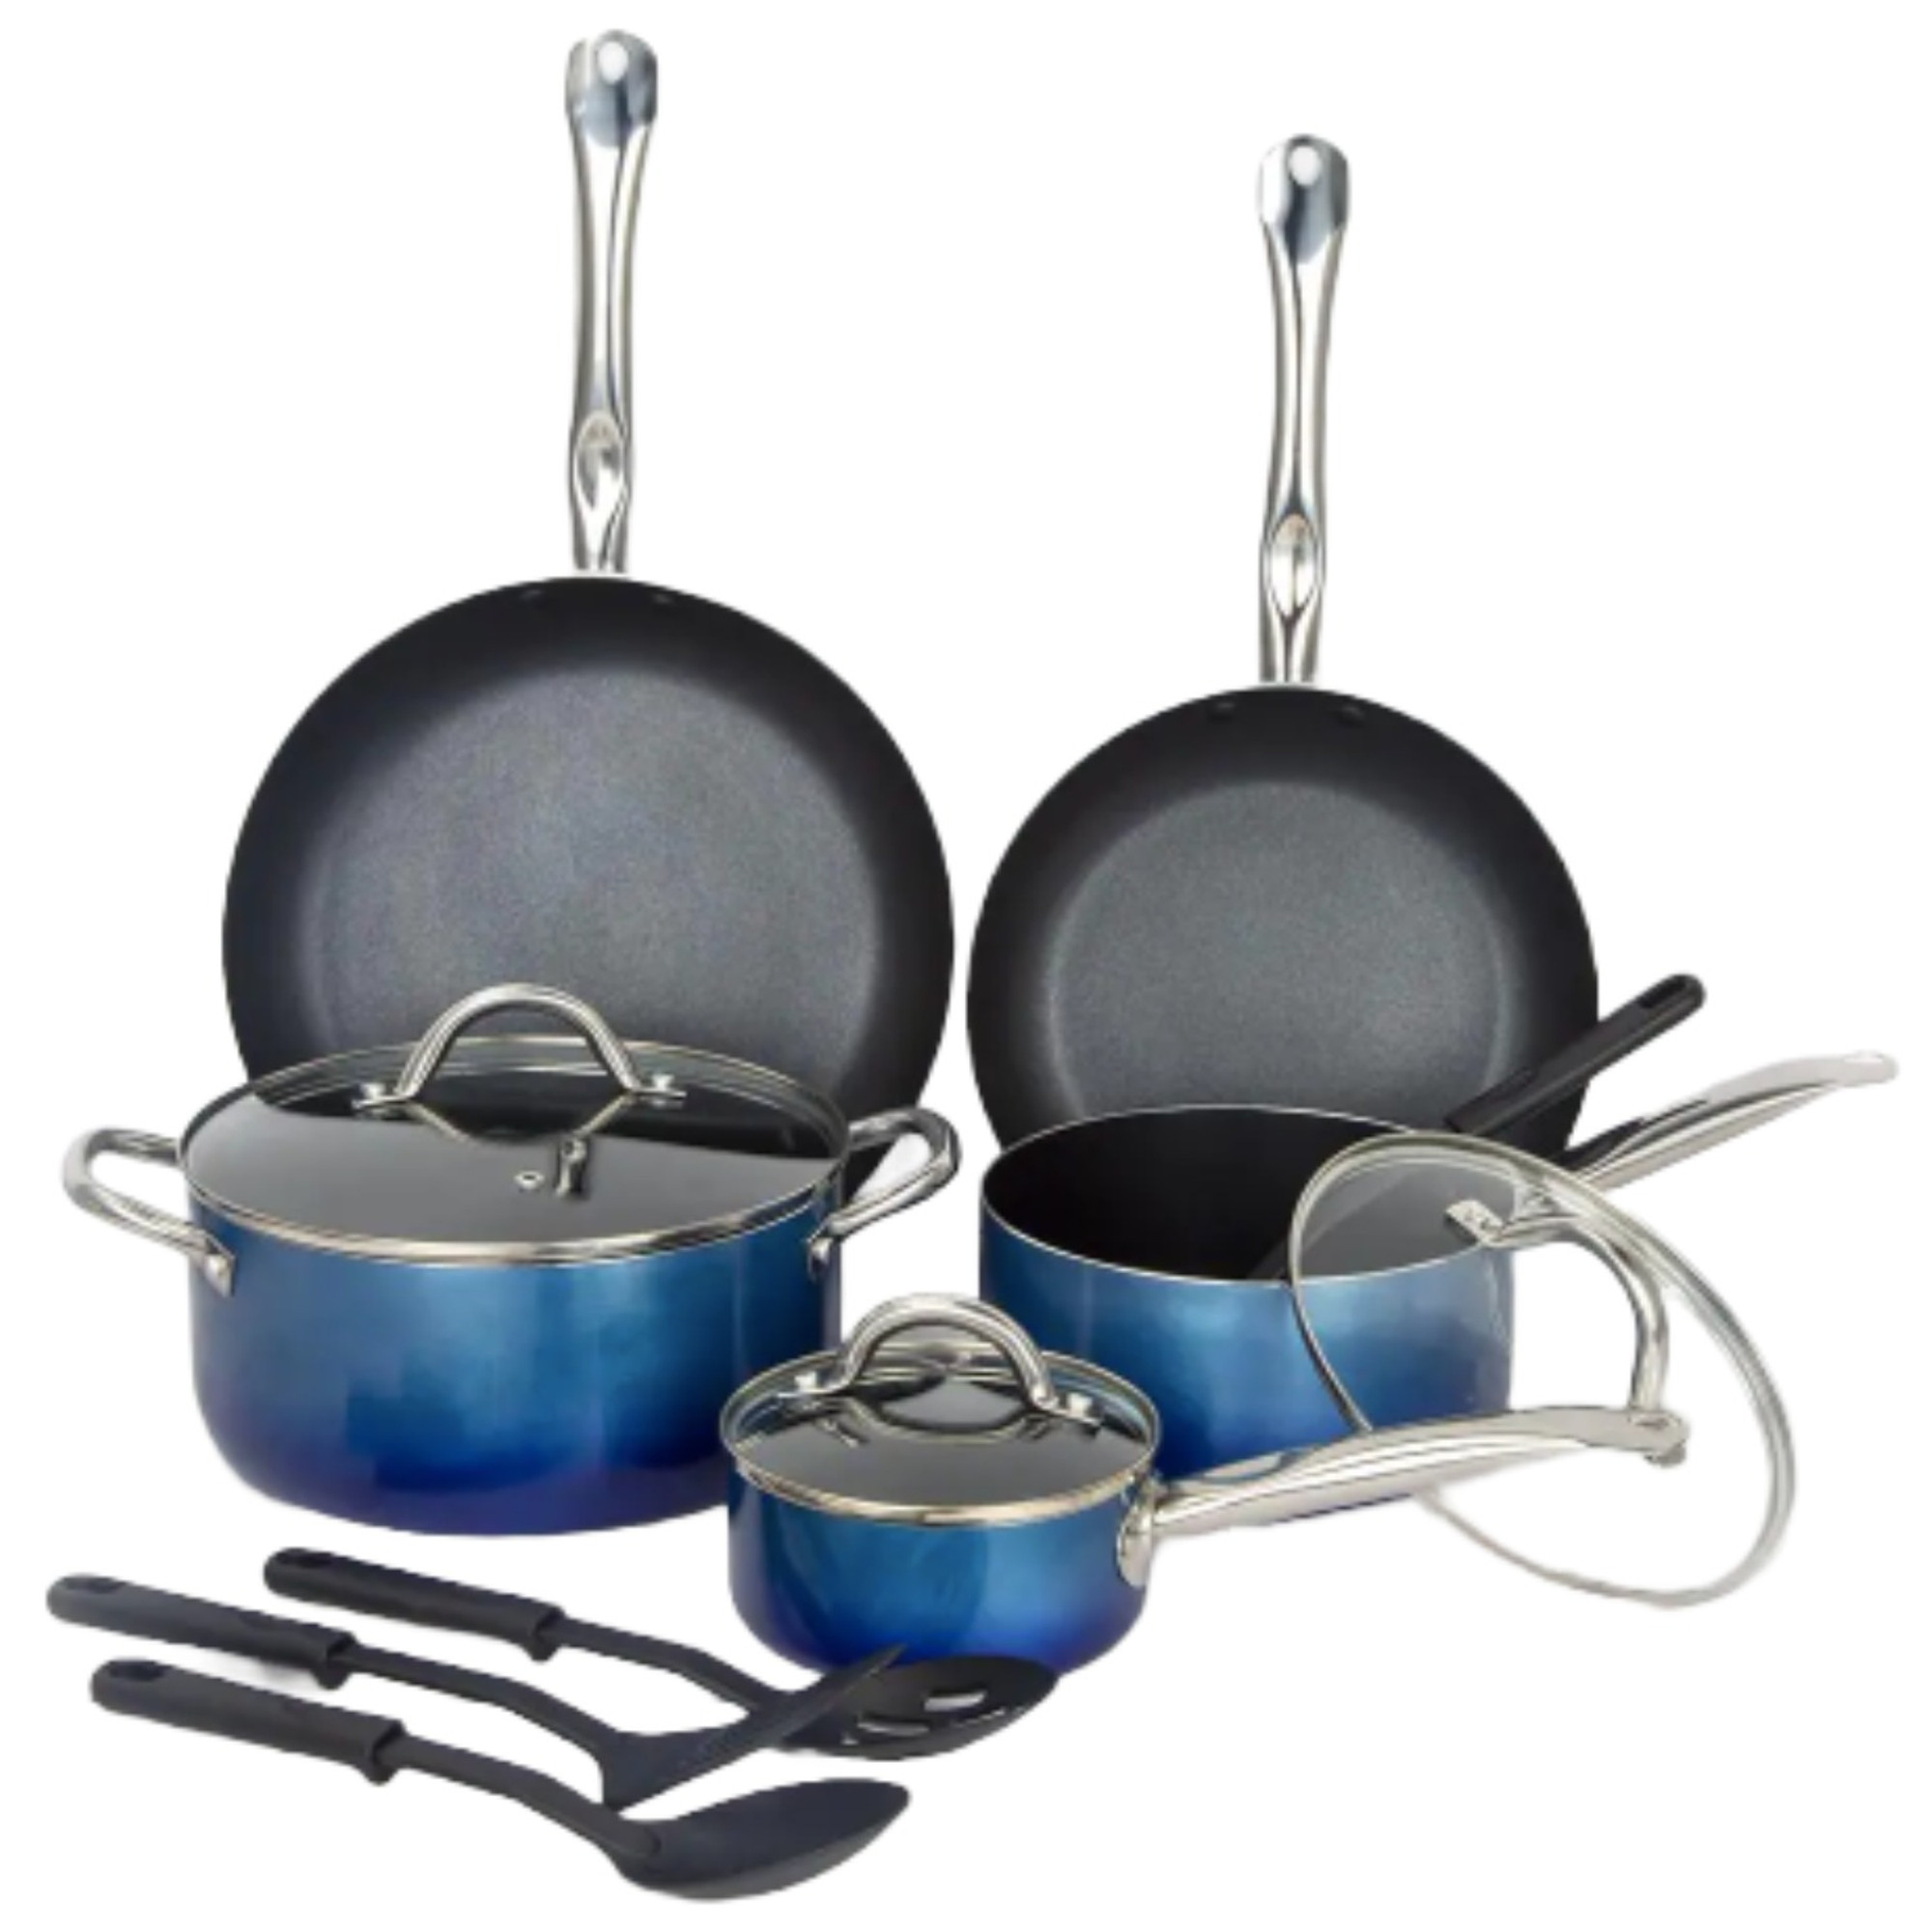 8-Piece Stainless Steel Nonstick Dishwasher Safe Cookware Set